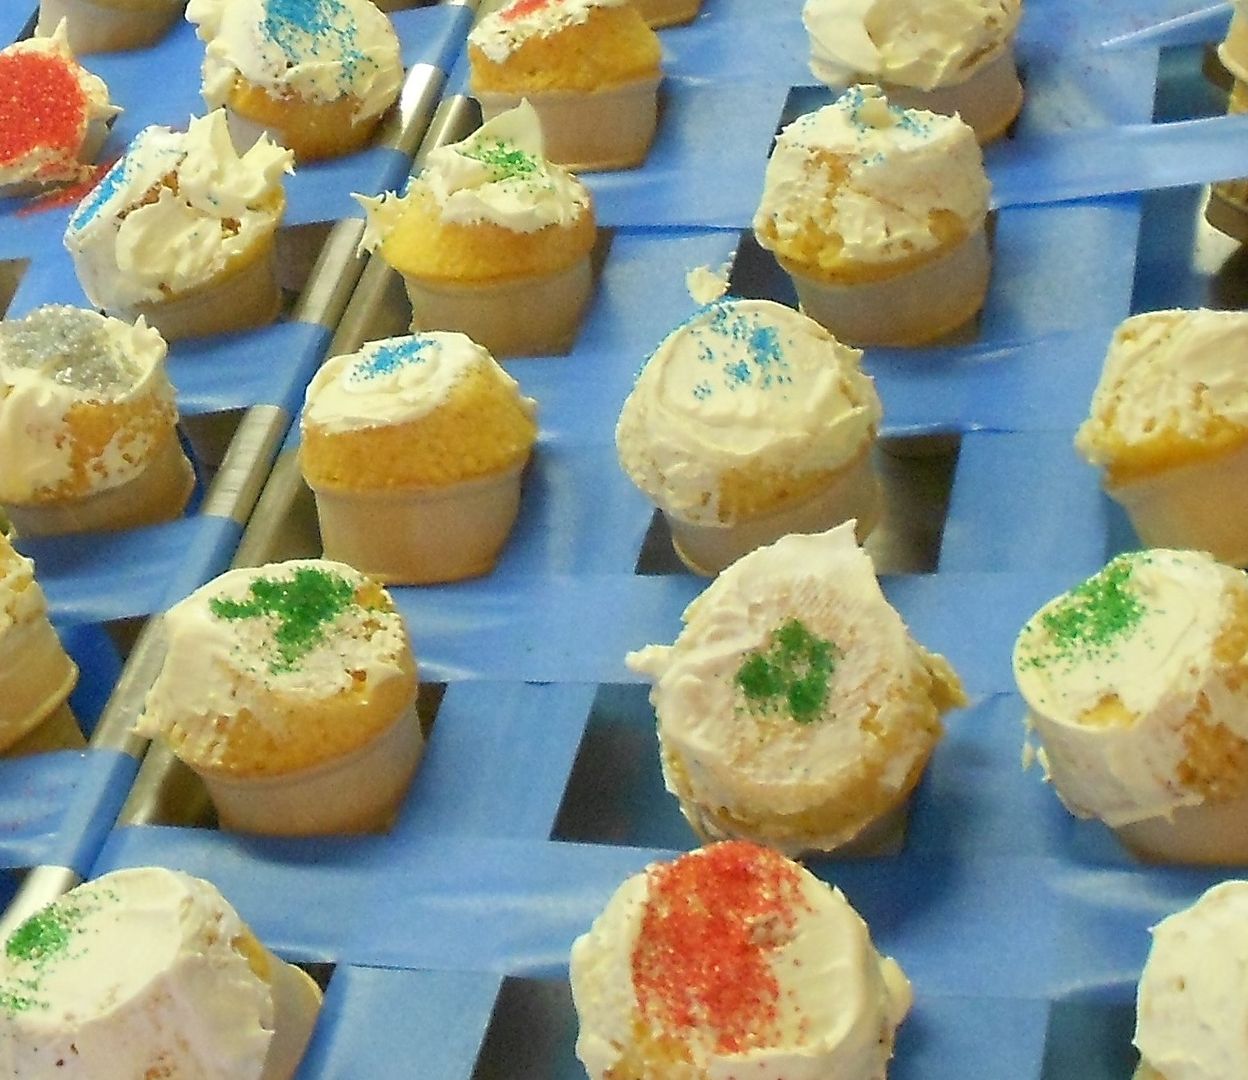 vbs 2013 cupcakes